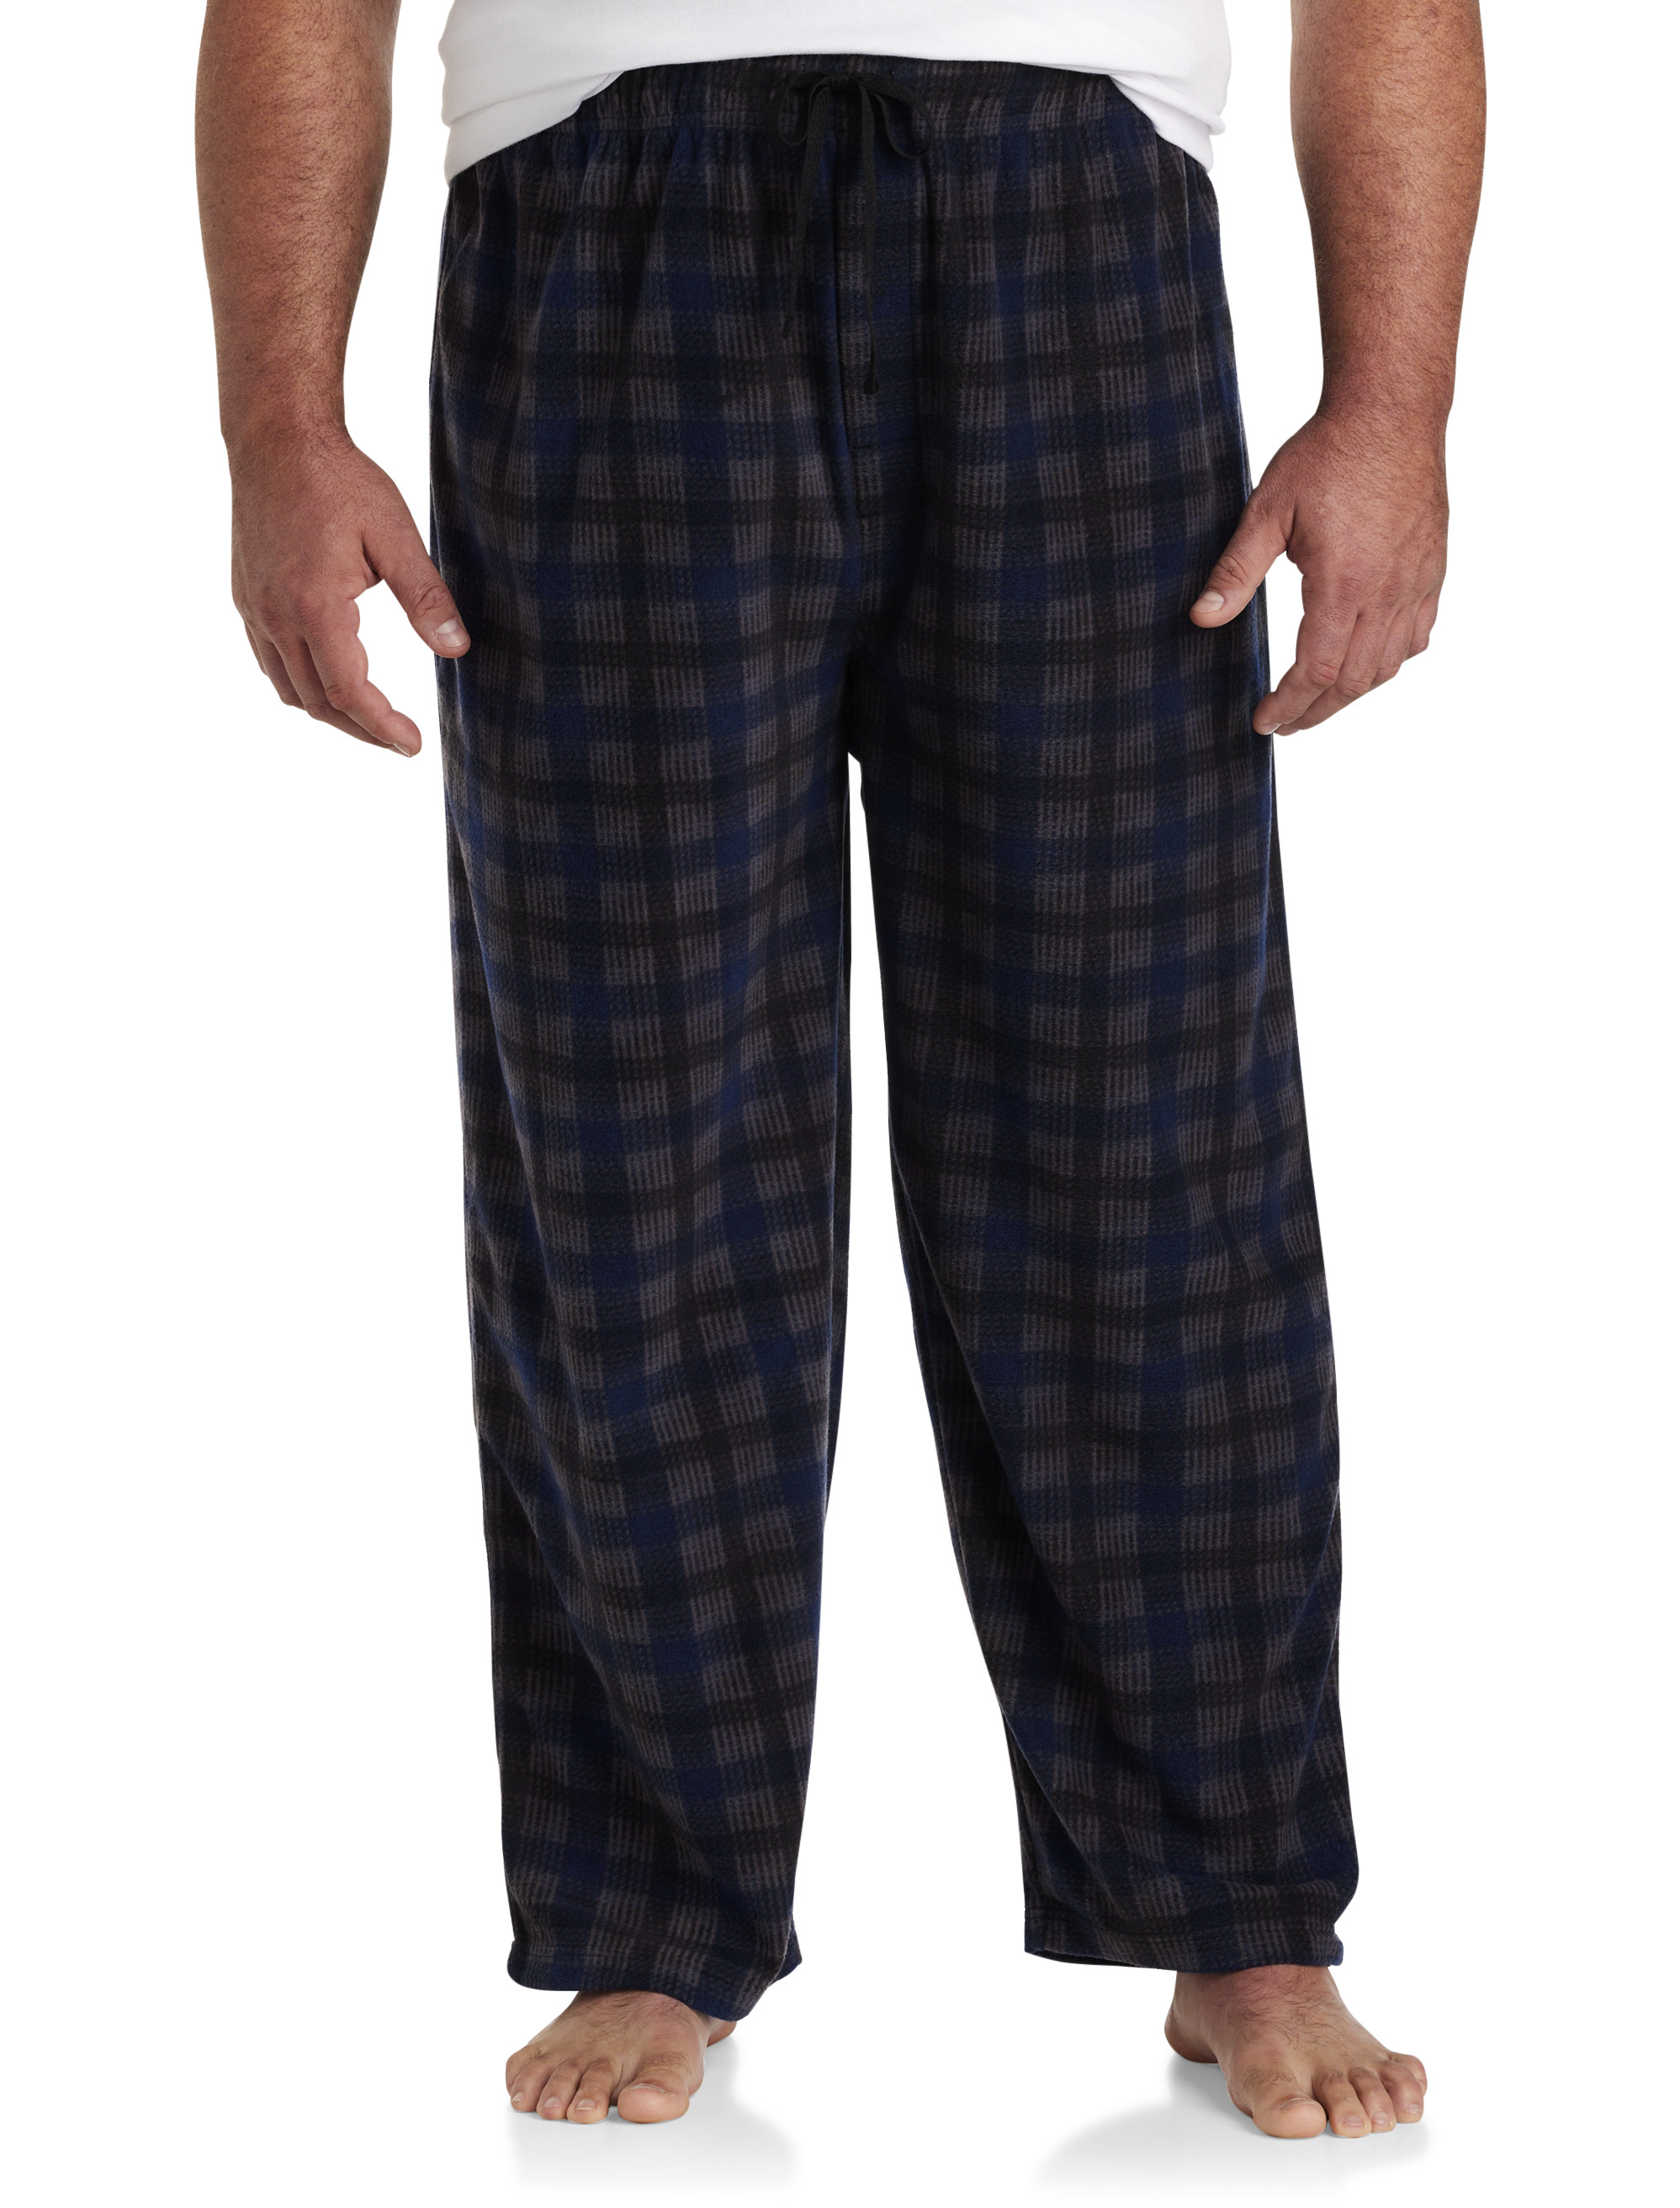 Mens Pajamas Plaid Pajama Pants Sleep Long Lounge Pant with